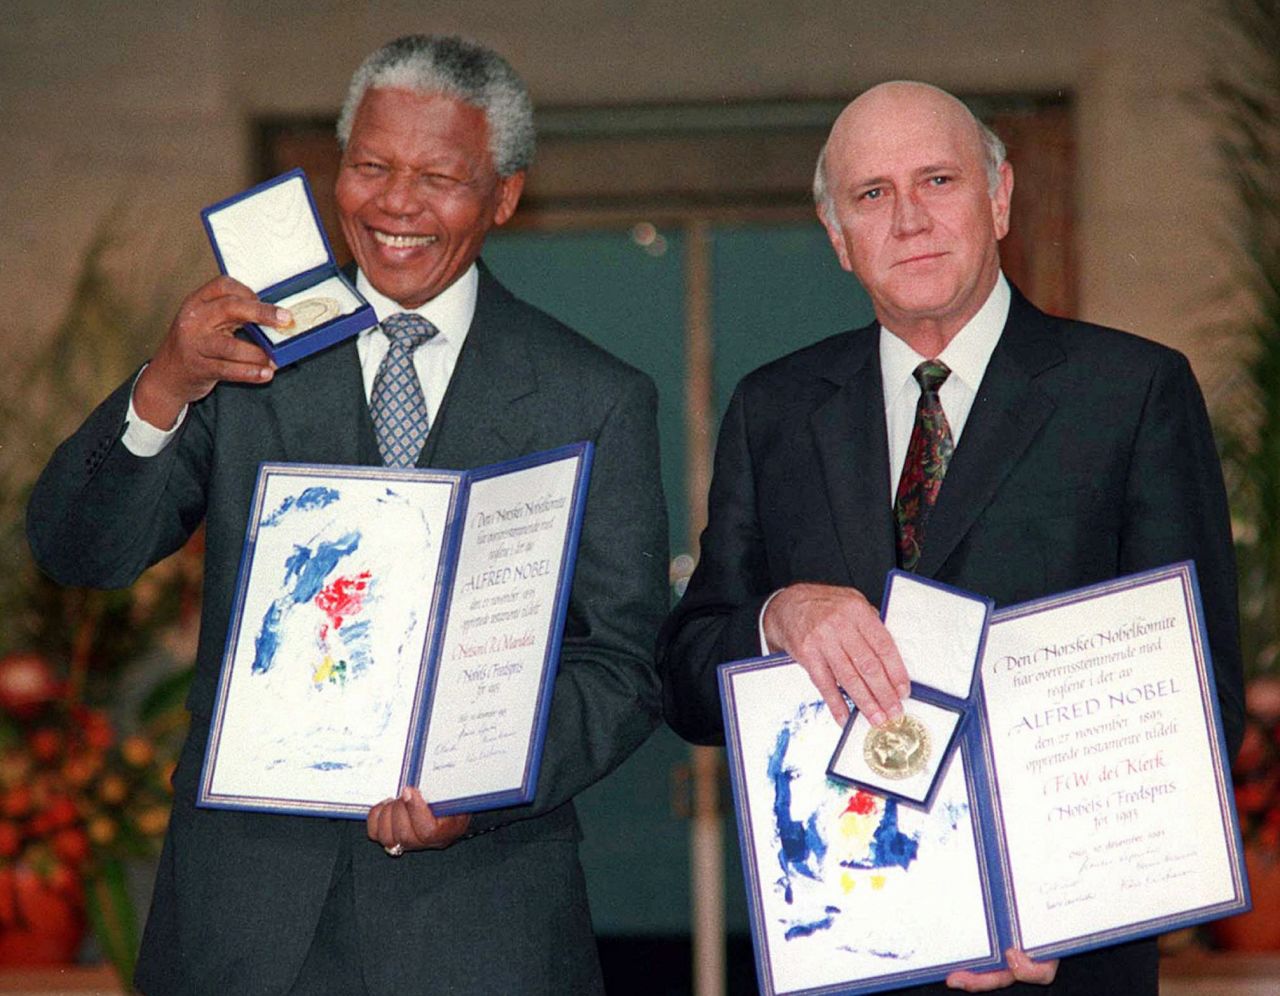 South African President Mandela and Deputy President de Klerk pose with their Nobel Peace Prize medals on December 10, 1993, in Oslo, Norway.